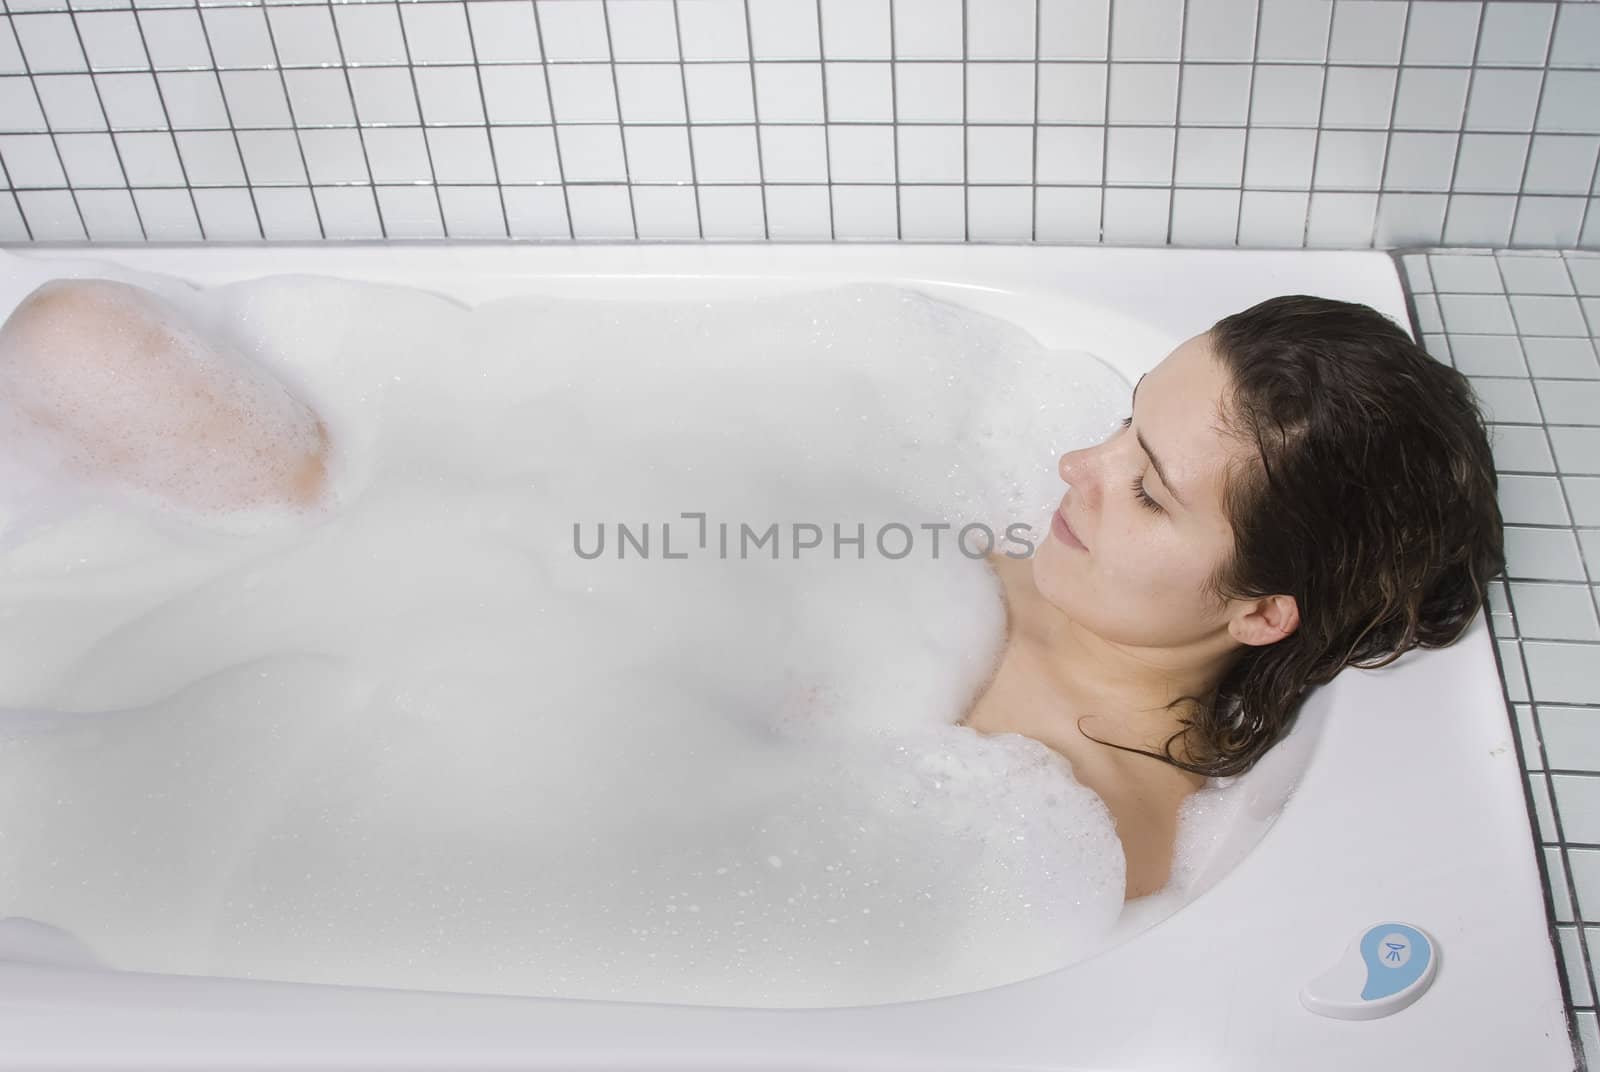  woman enjoys the bubble-bath